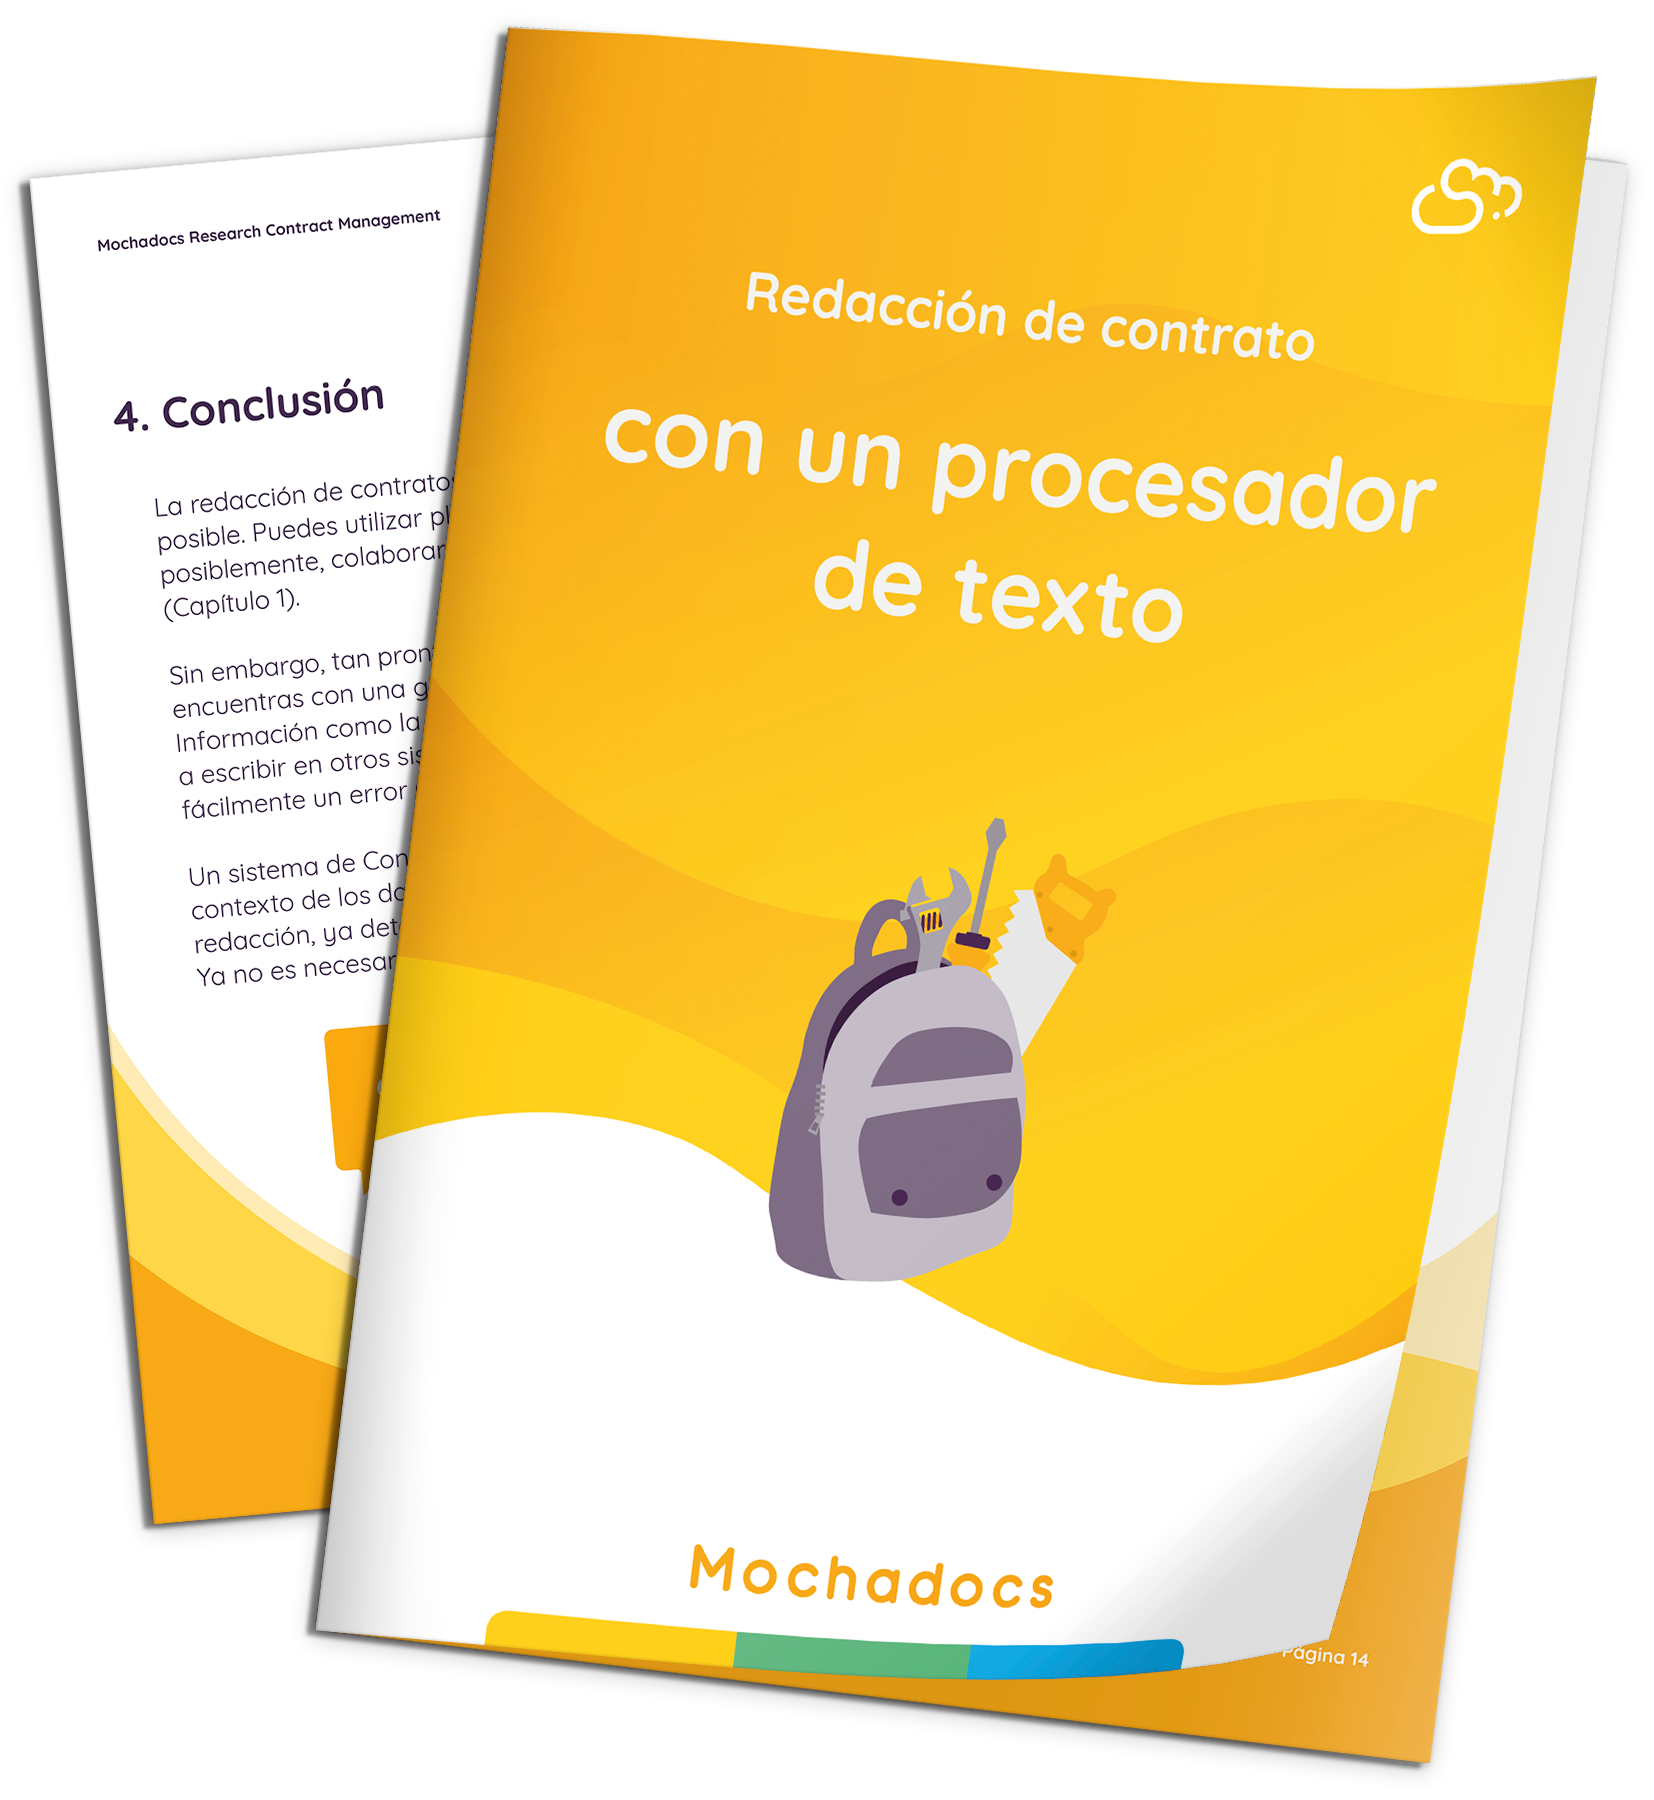 Mochadocs - Contract Creation - eBook - Redacción de contrato con un procesador de texto